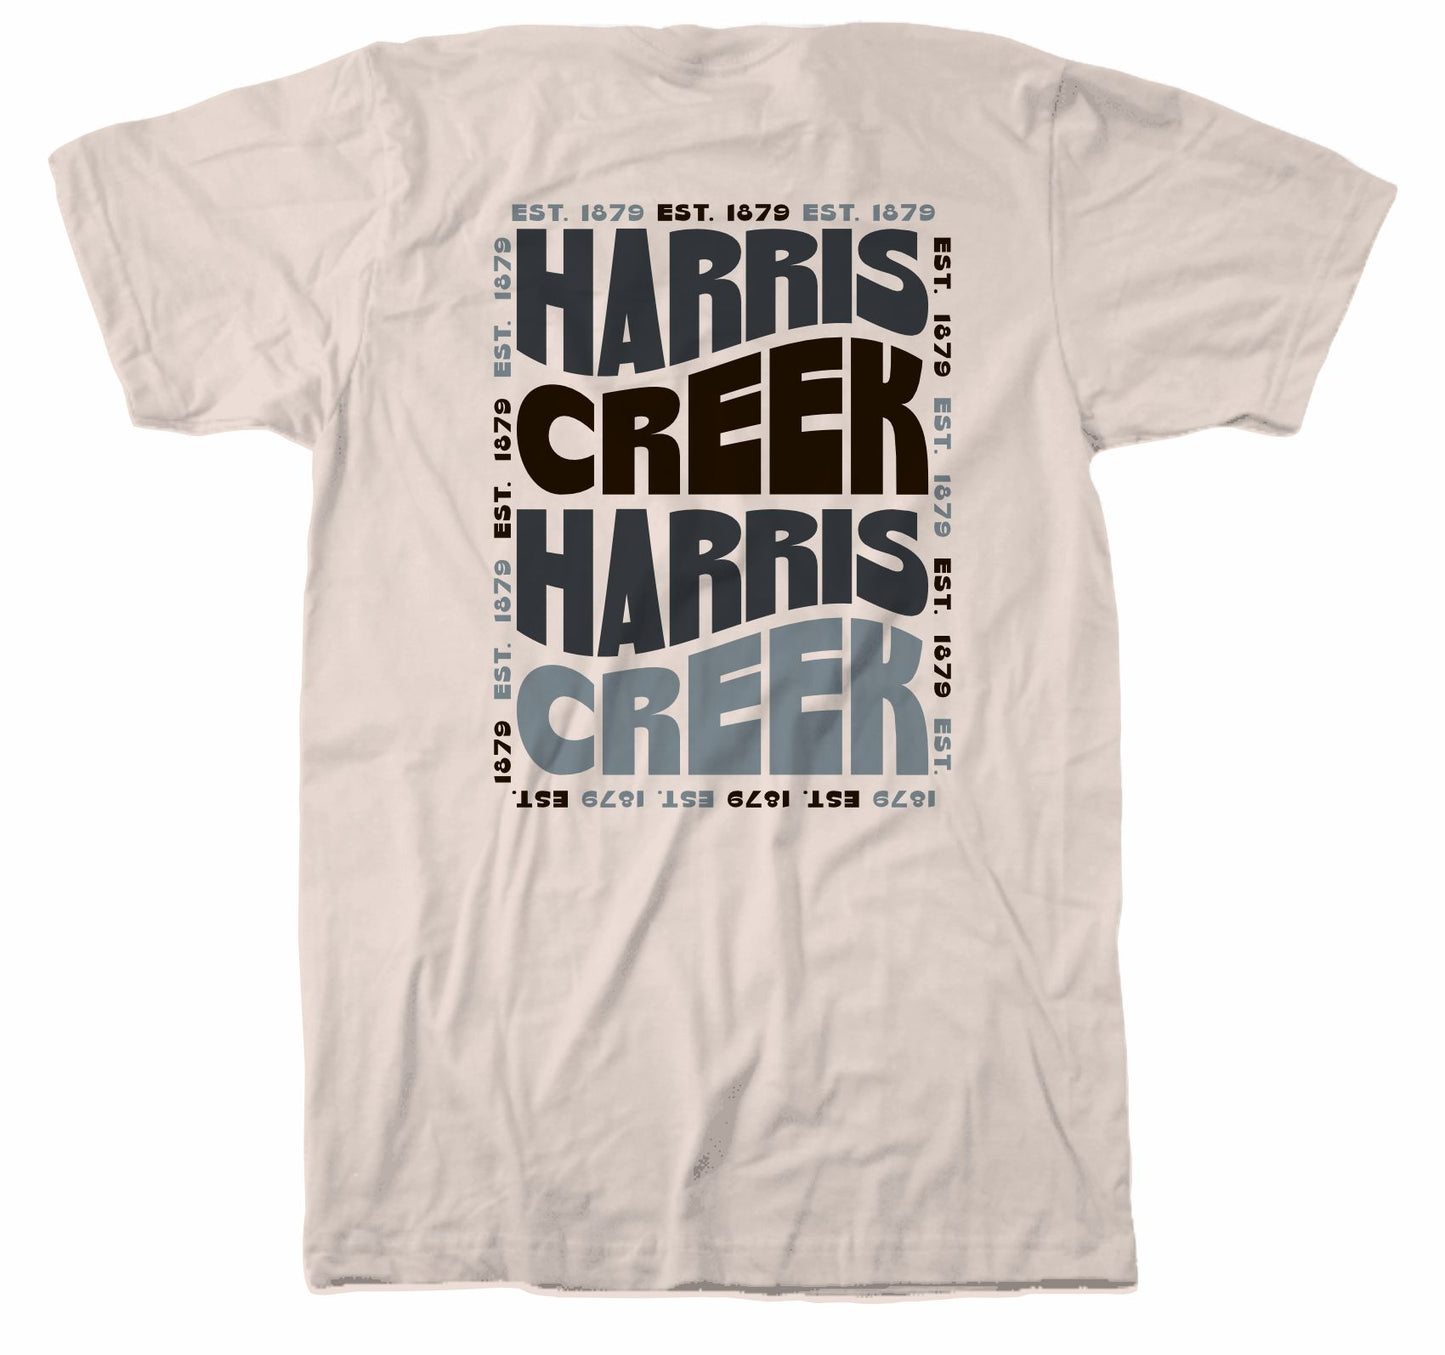 Harris Creek Groovy EST Tee